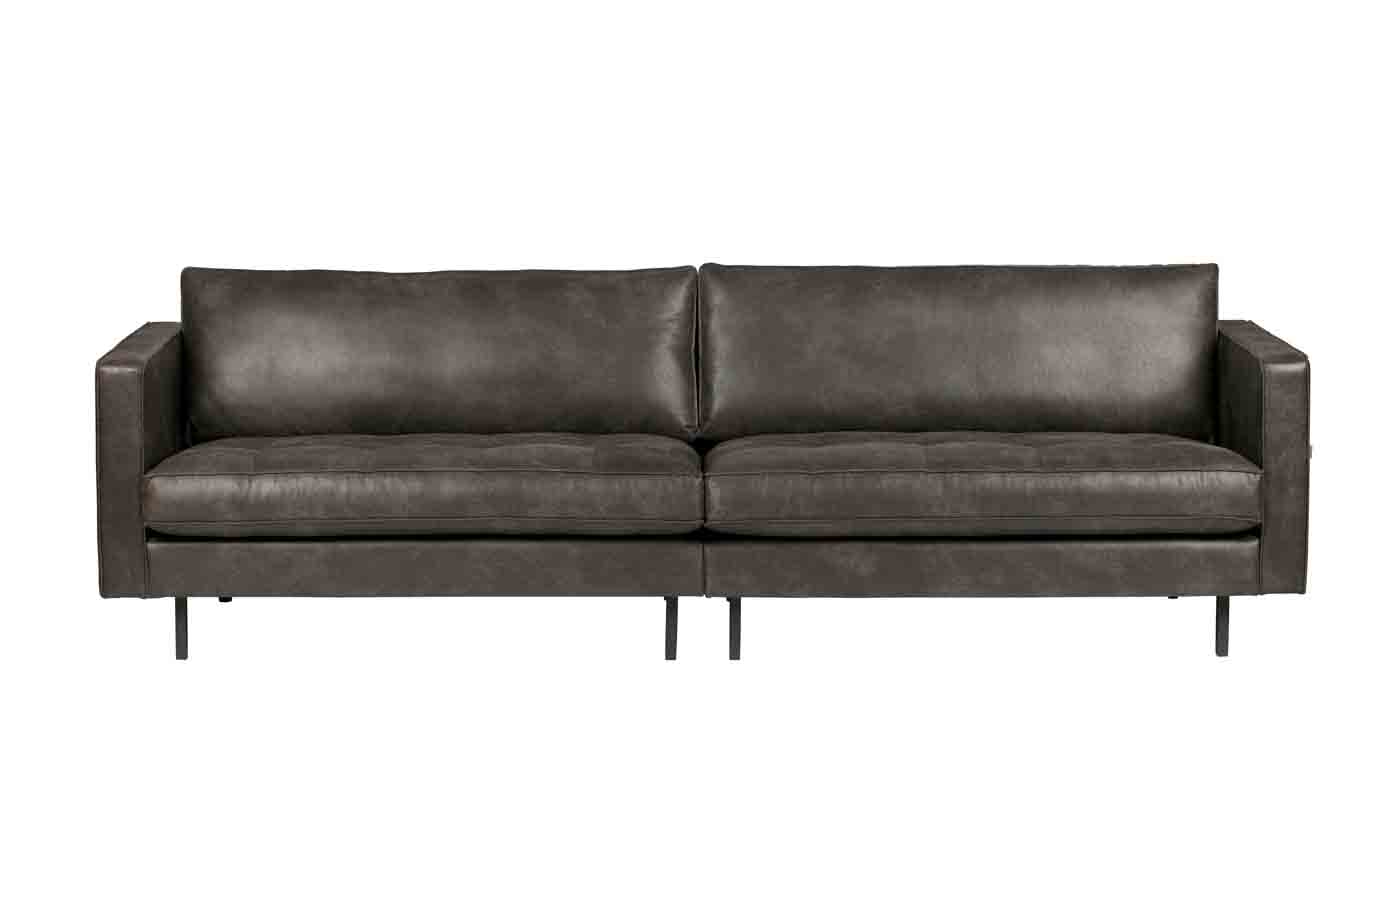 Classic Sofa Rodeo aus recyceltem Leder. Hochwertiges Design Sofa mit hohen Sitzkomfort